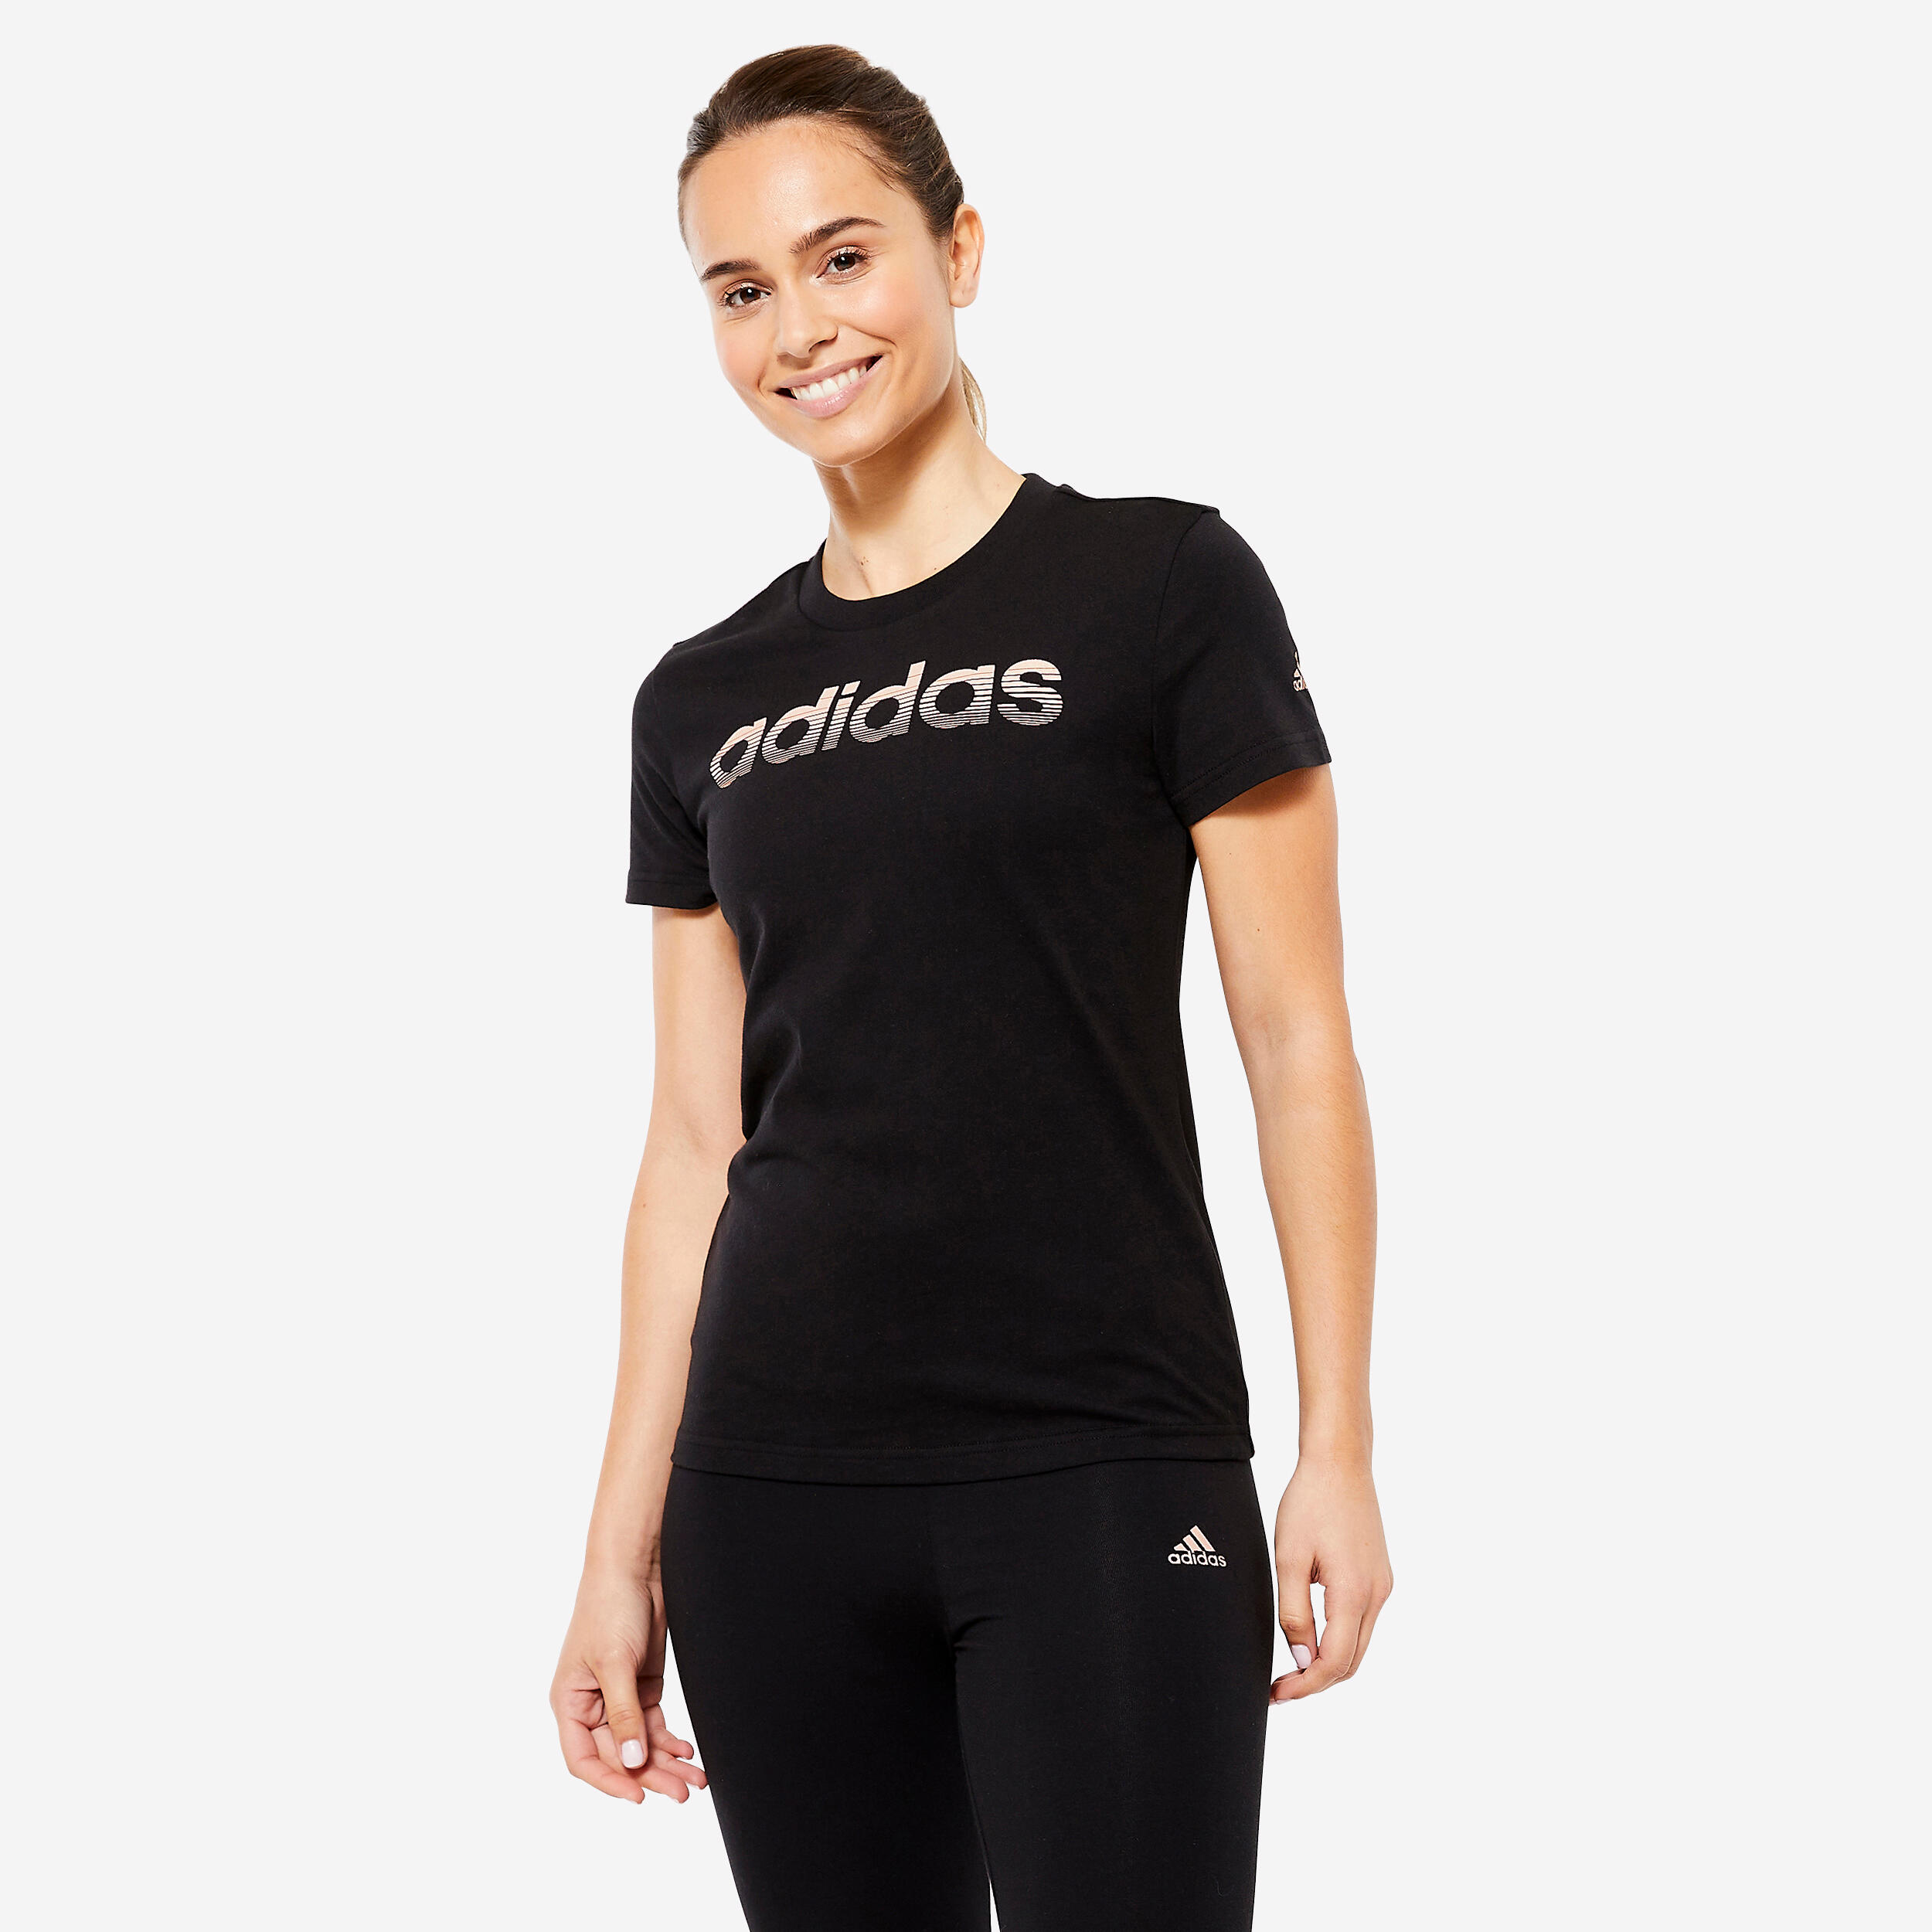 ADIDAS Women's Low-Impact Fitness T-Shirt - Black